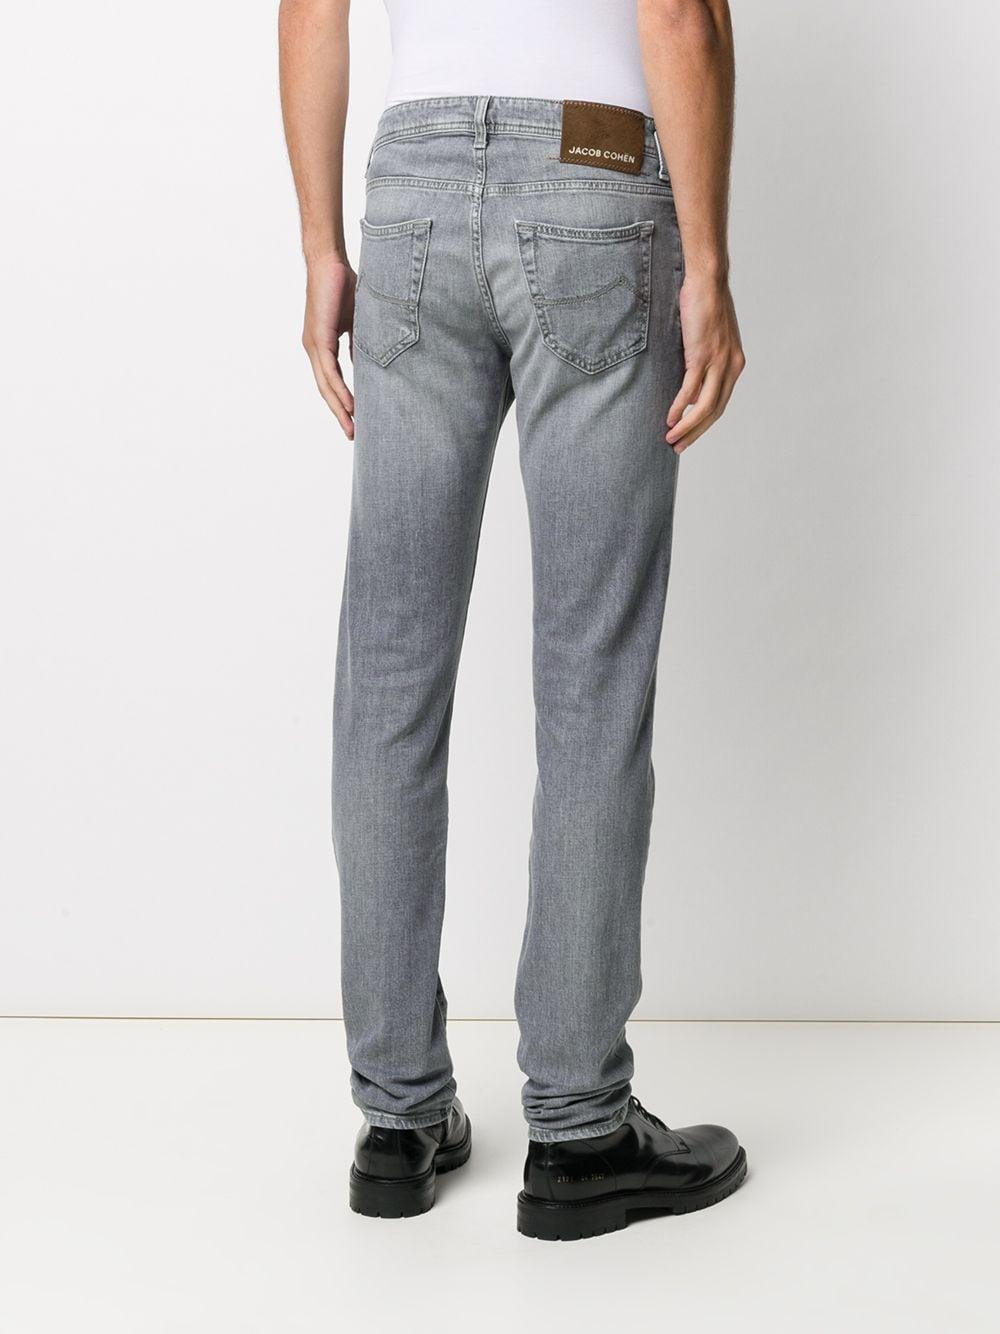 Jacob Cohen Denim Slim-fit Light Wash Jeans in Grey (Gray) for Men - Lyst